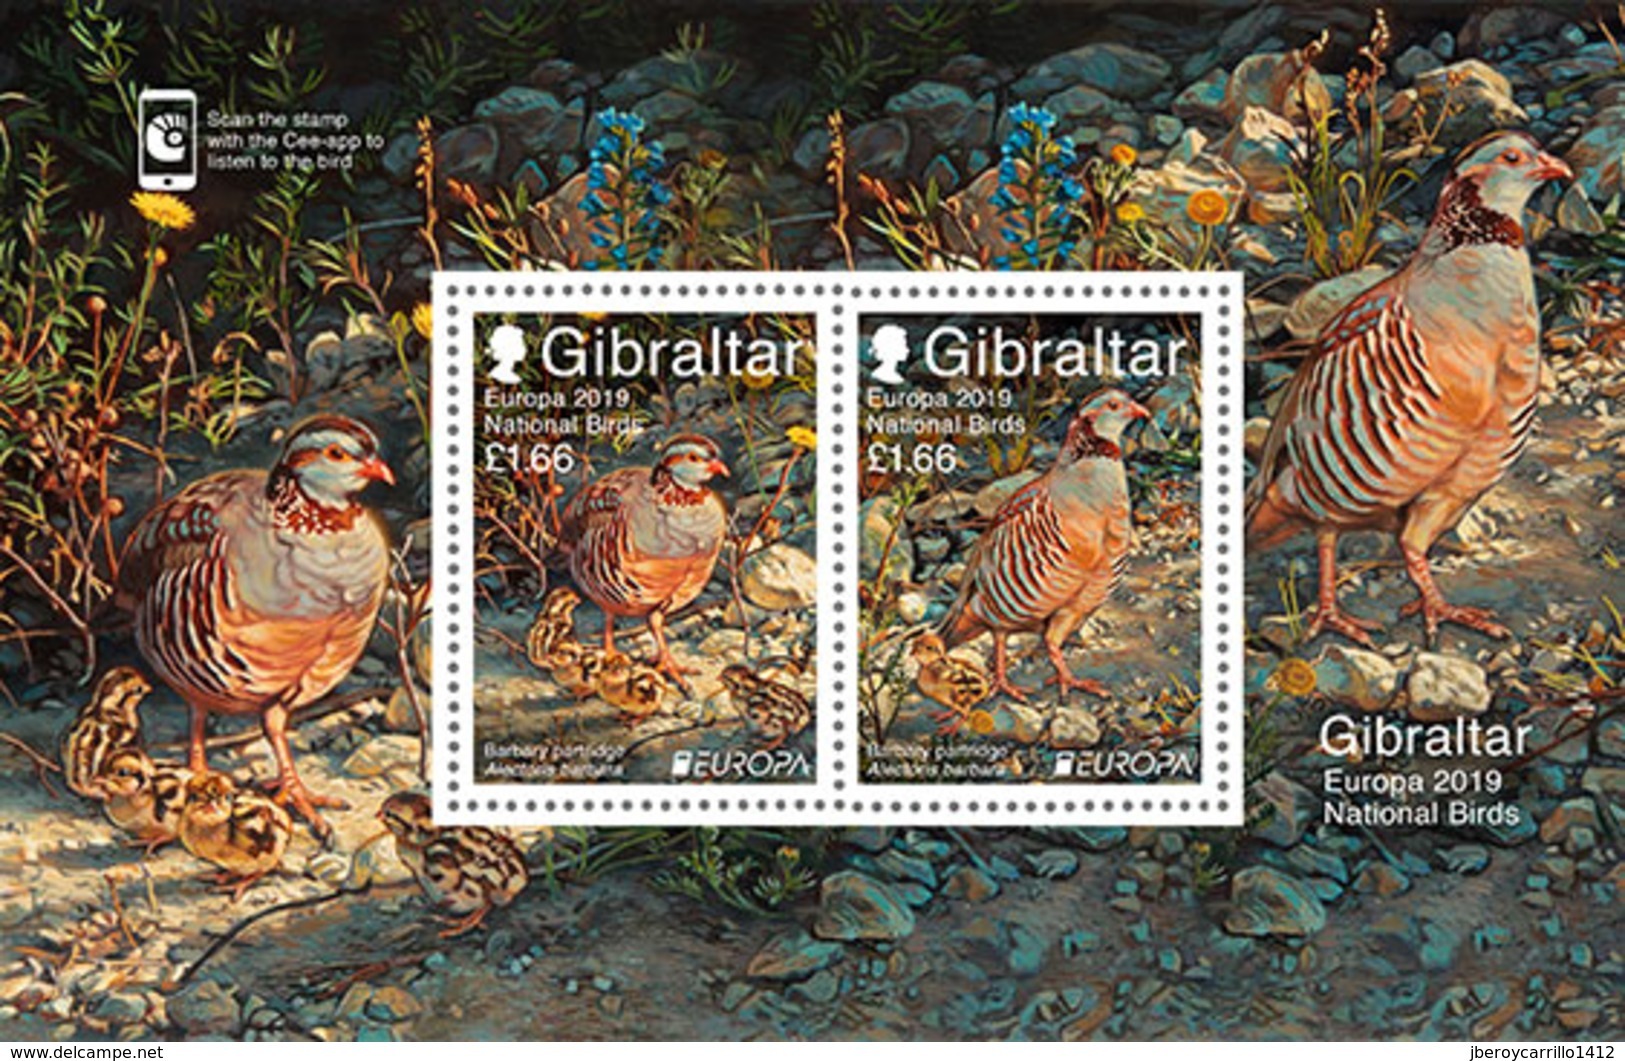 GIBRALTAR 2019 - EUROPA 2019 - -"AVES - BIRDS/WILDLIFE - VÖGEL - OISEAUX"- BARBARY PARTRIDGE  - SOUVENIR SHEET - Galline & Gallinaceo